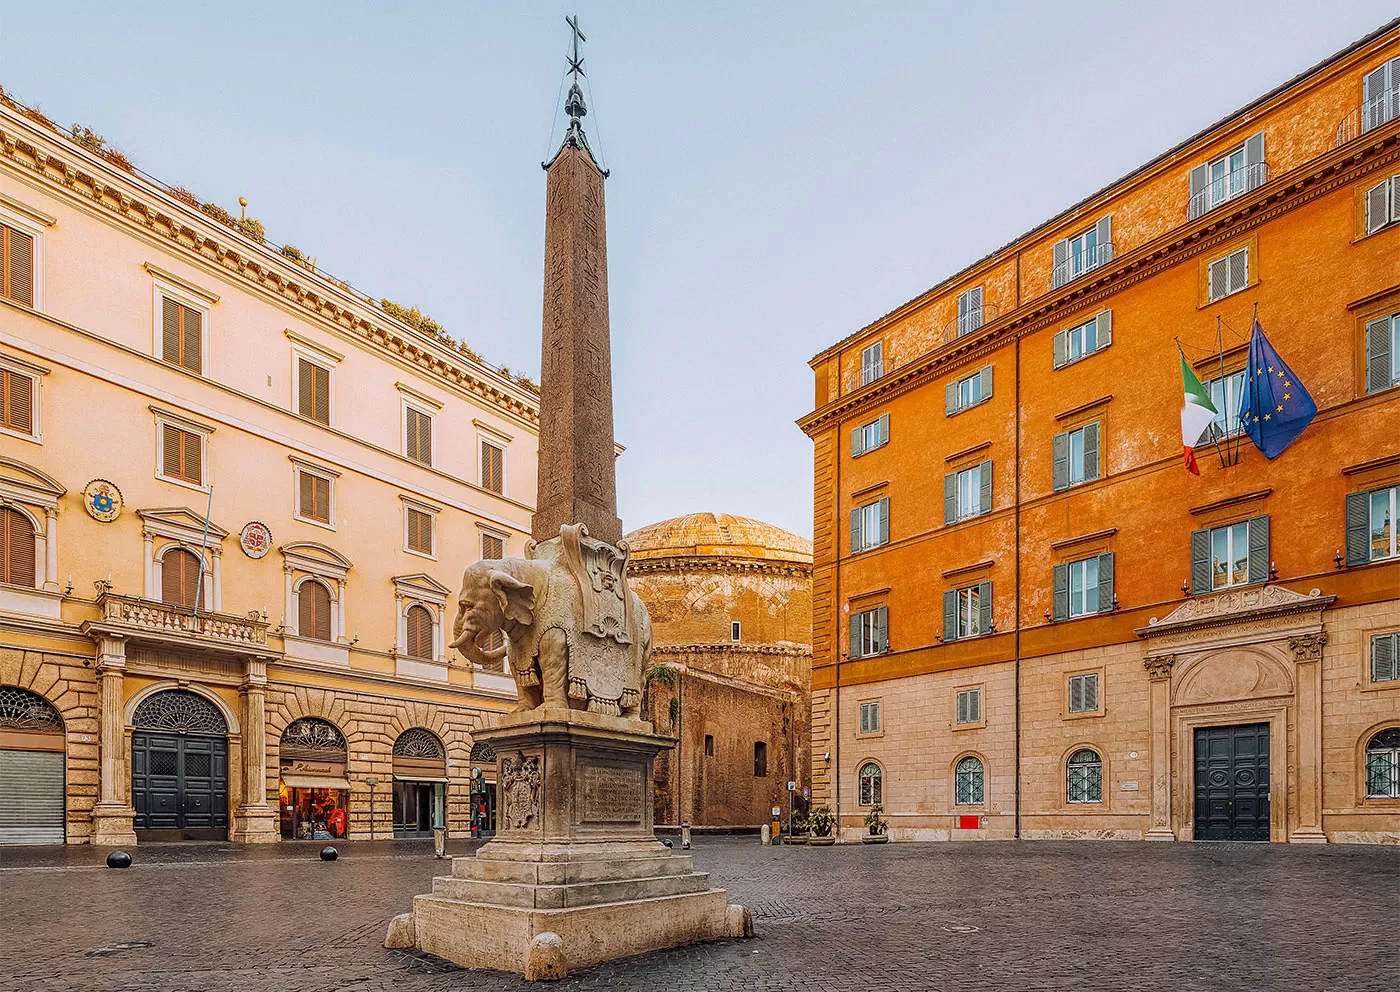 Hotels near the Pantheon Rome - Bernini's famous elephant statue in Piazza della Minerva